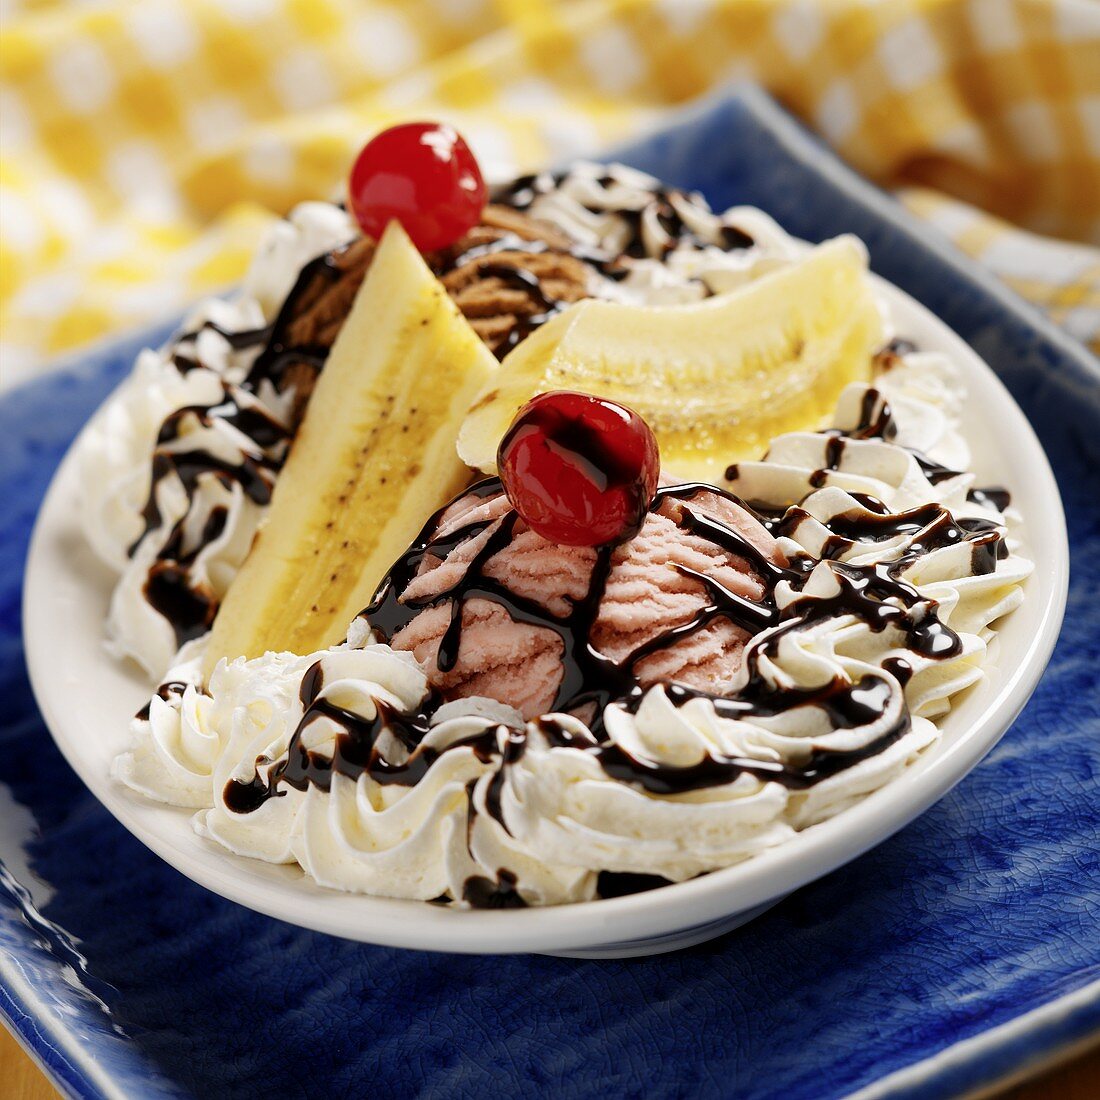 A Banana Split with Strawberry and Chocolate Ice Cream